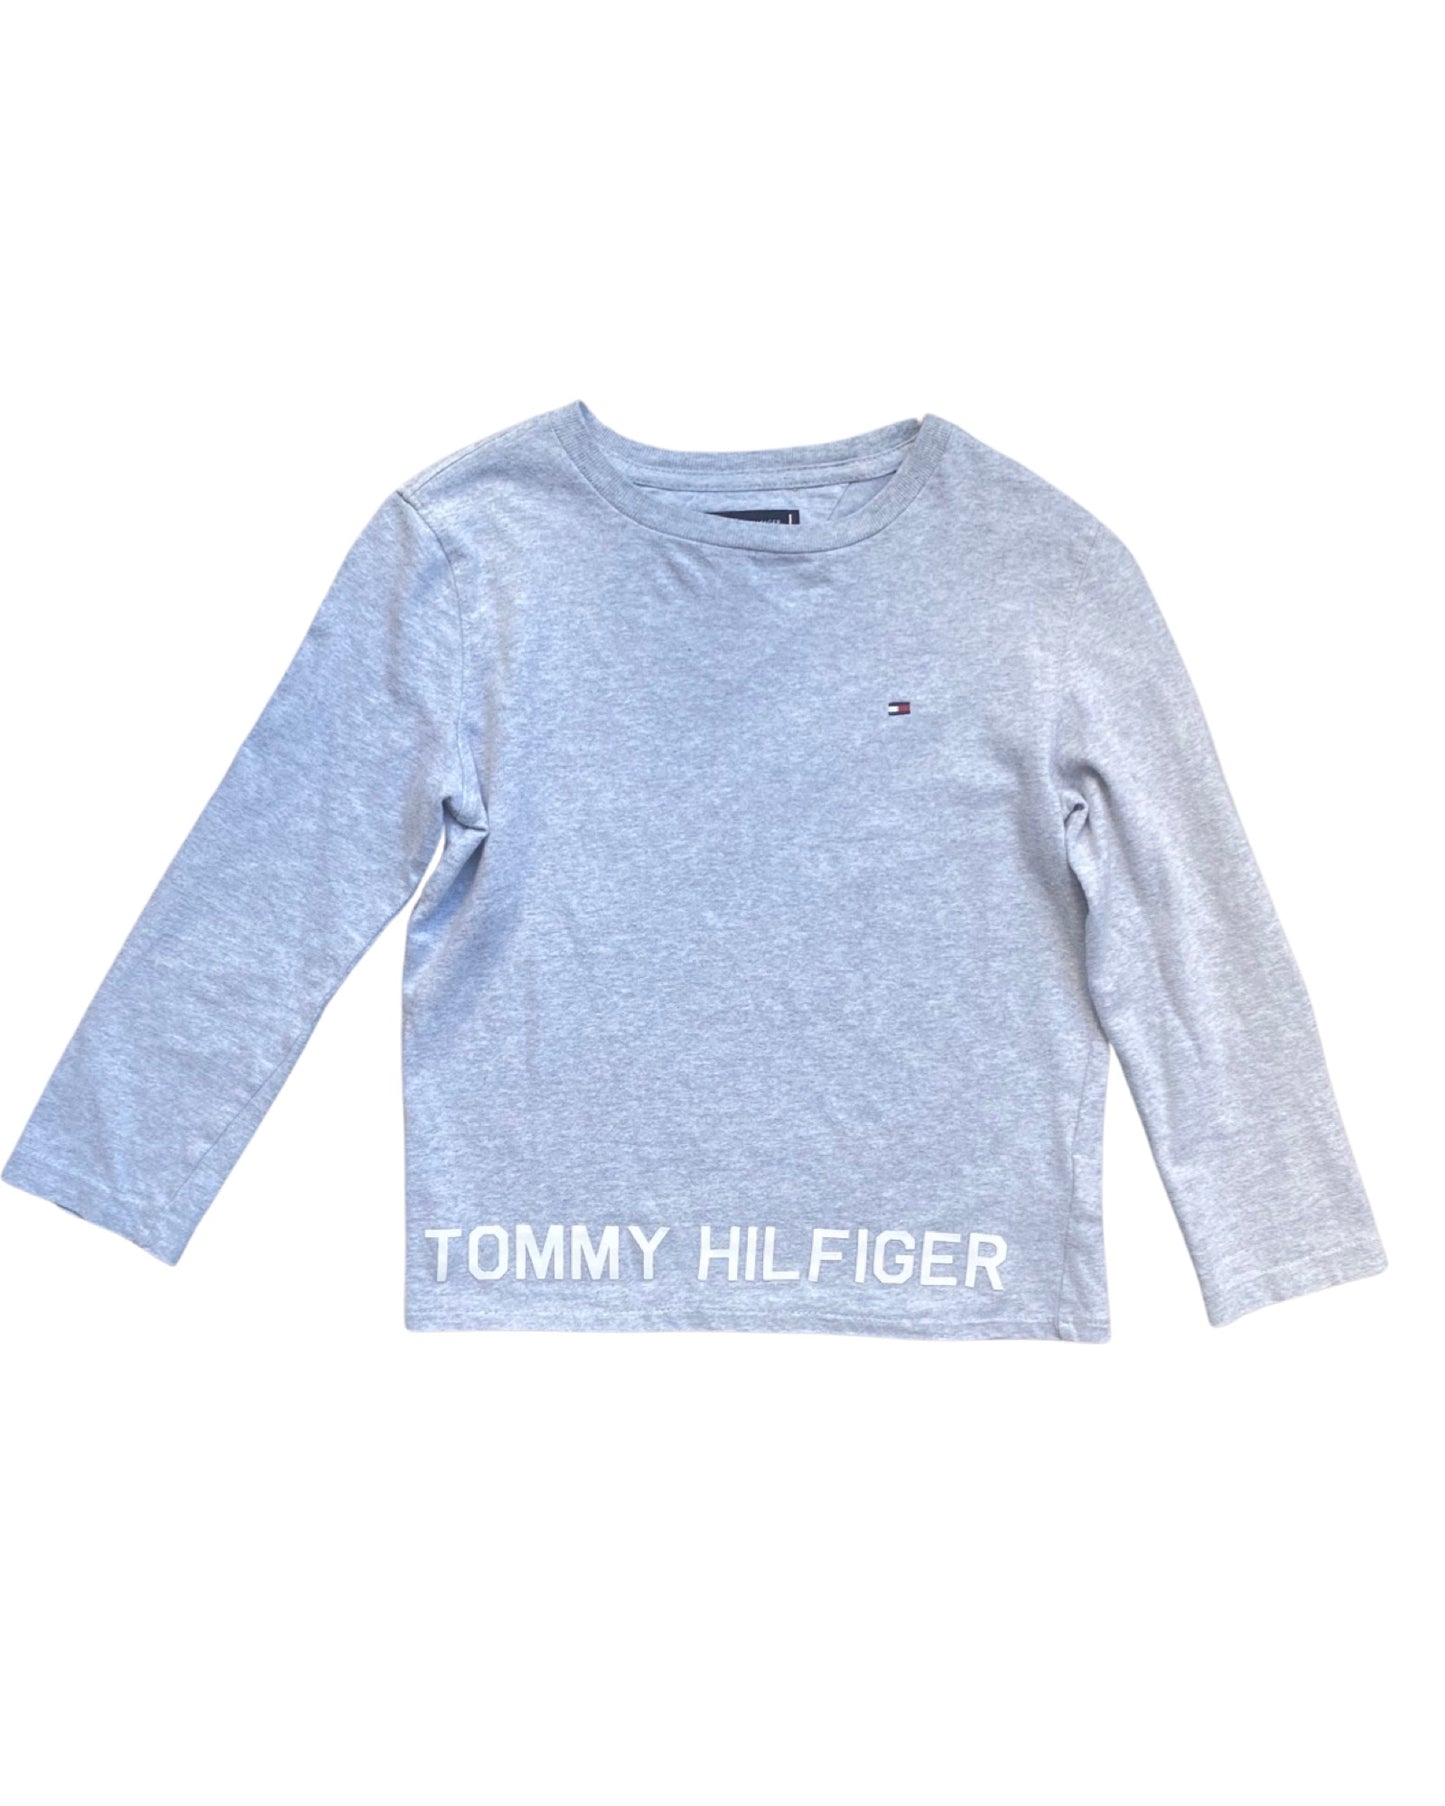 Tommy Hilfiger grey long sleeve logo top (7-8yrs)